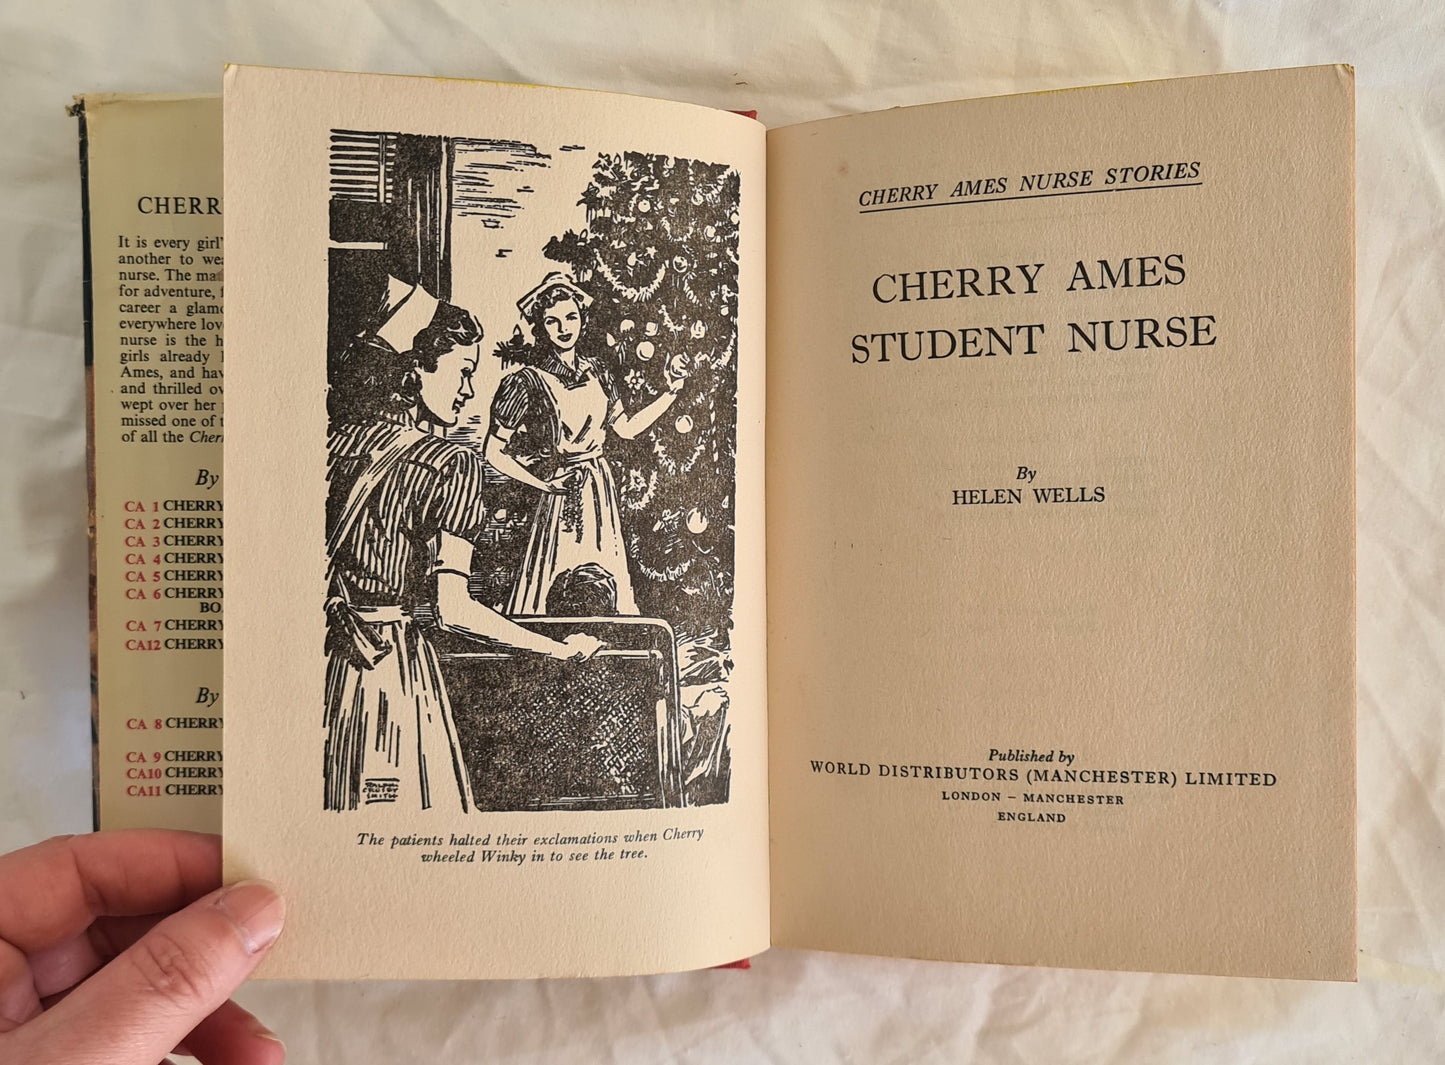 Cherry Ames Student Nurse by Helen Wells